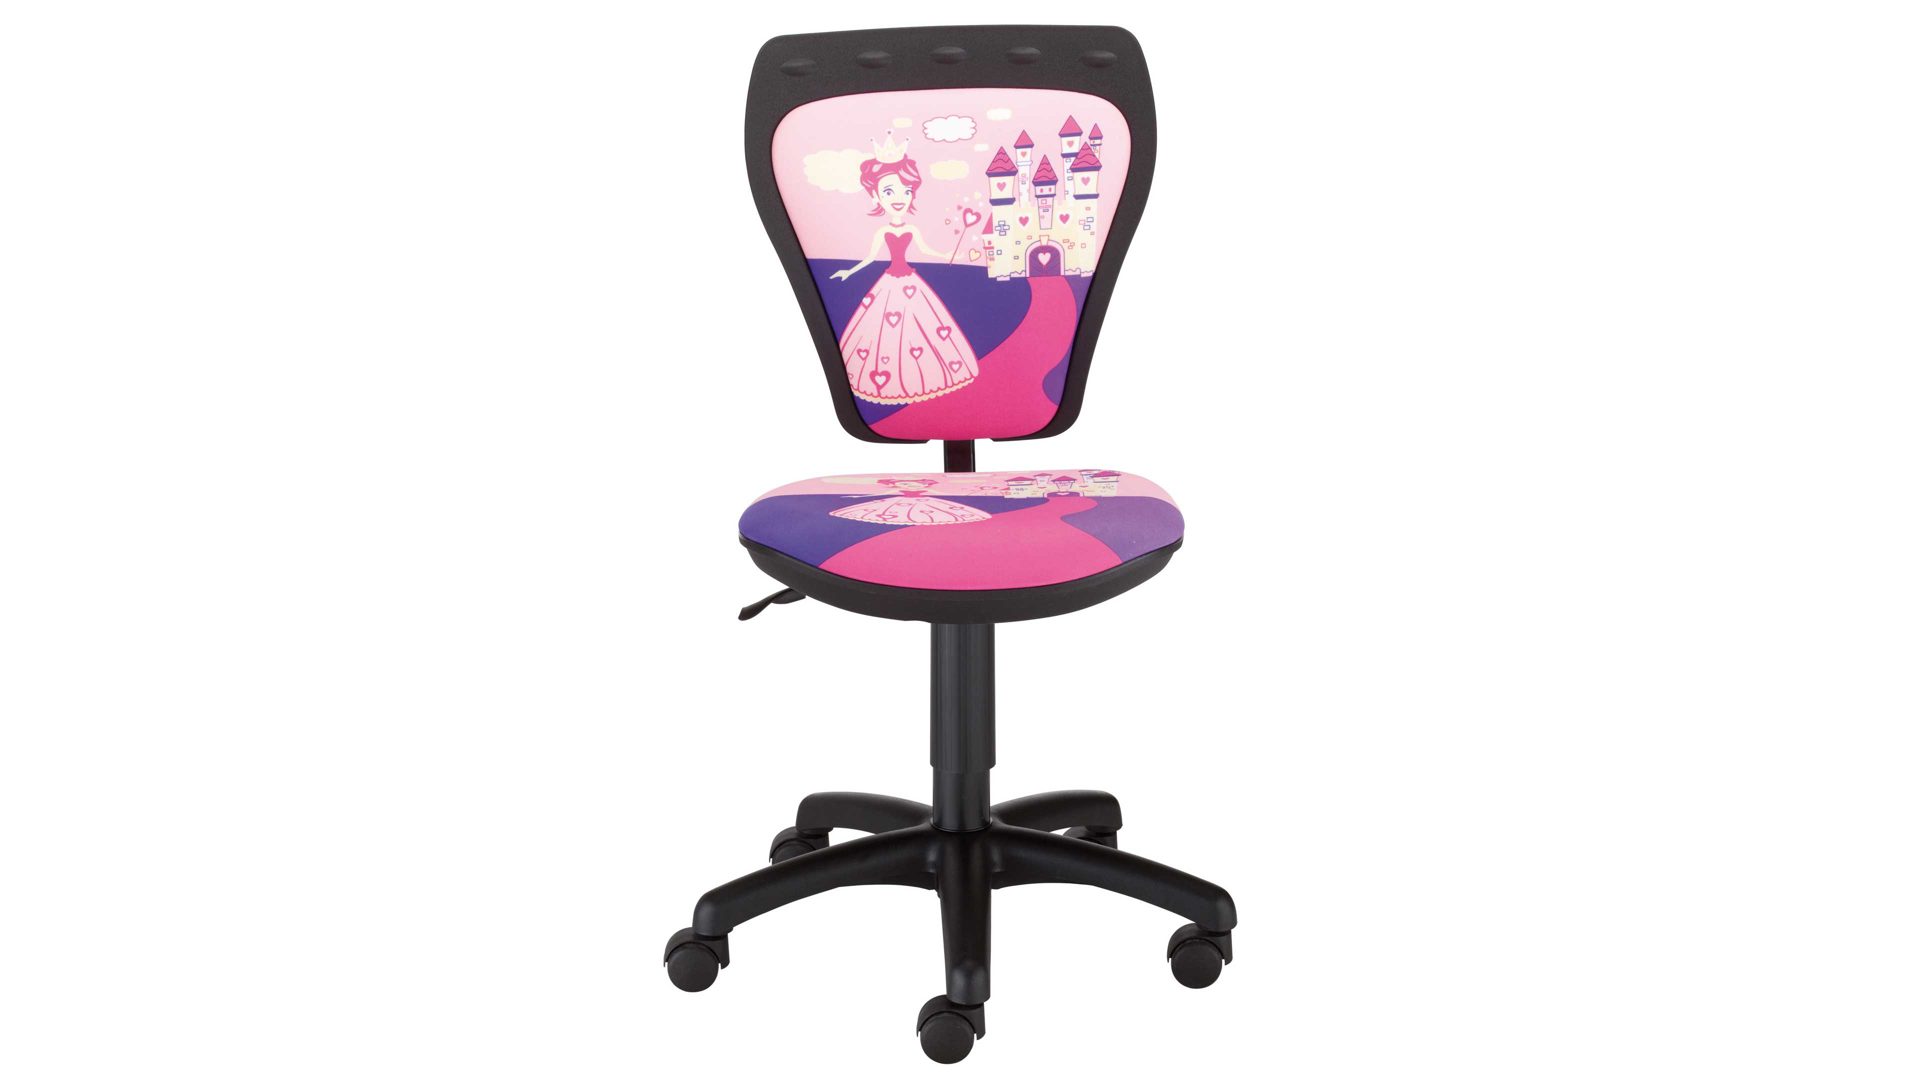 Drehstuhl Nowy styl aus Stoff in Pink Kinder-Drehstuhl Ministyle pinker Motivbezug Cartoon Fox Princess & schwarzes Drehkreuz